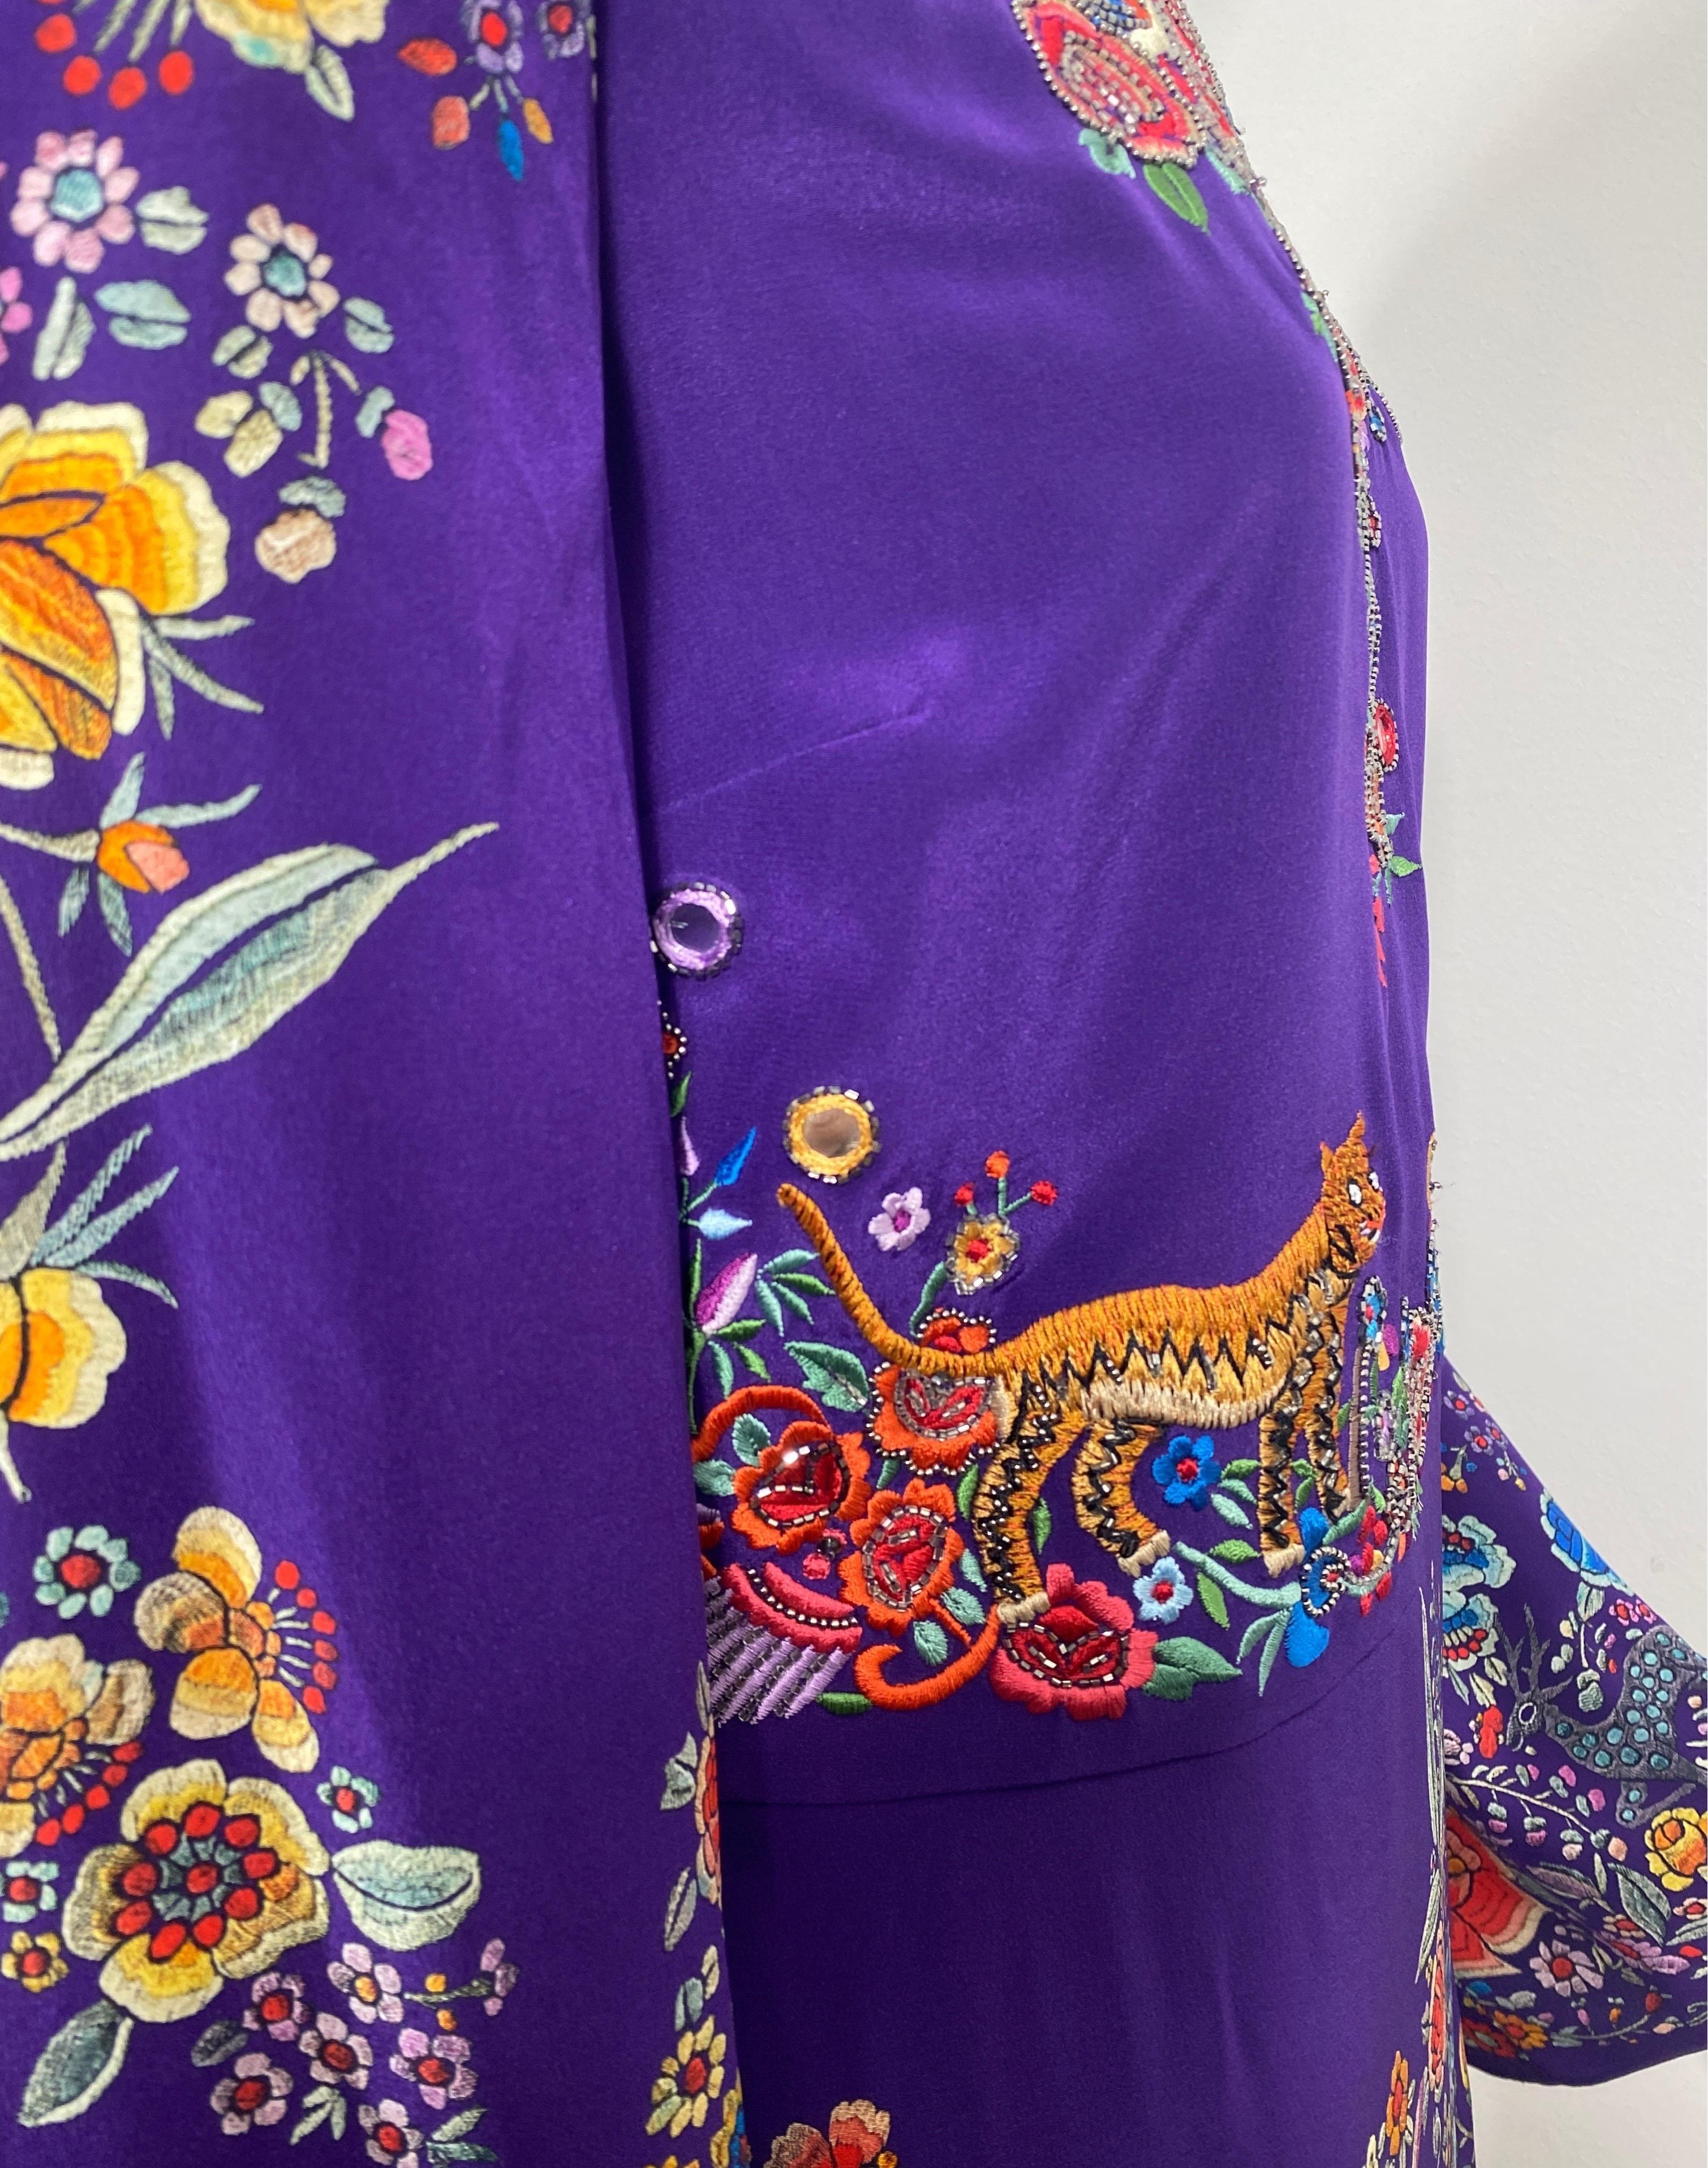 Roberto Cavalli Resort 2017 Purple Multi Embroidered Silk Print Dress-Size 40 For Sale 6